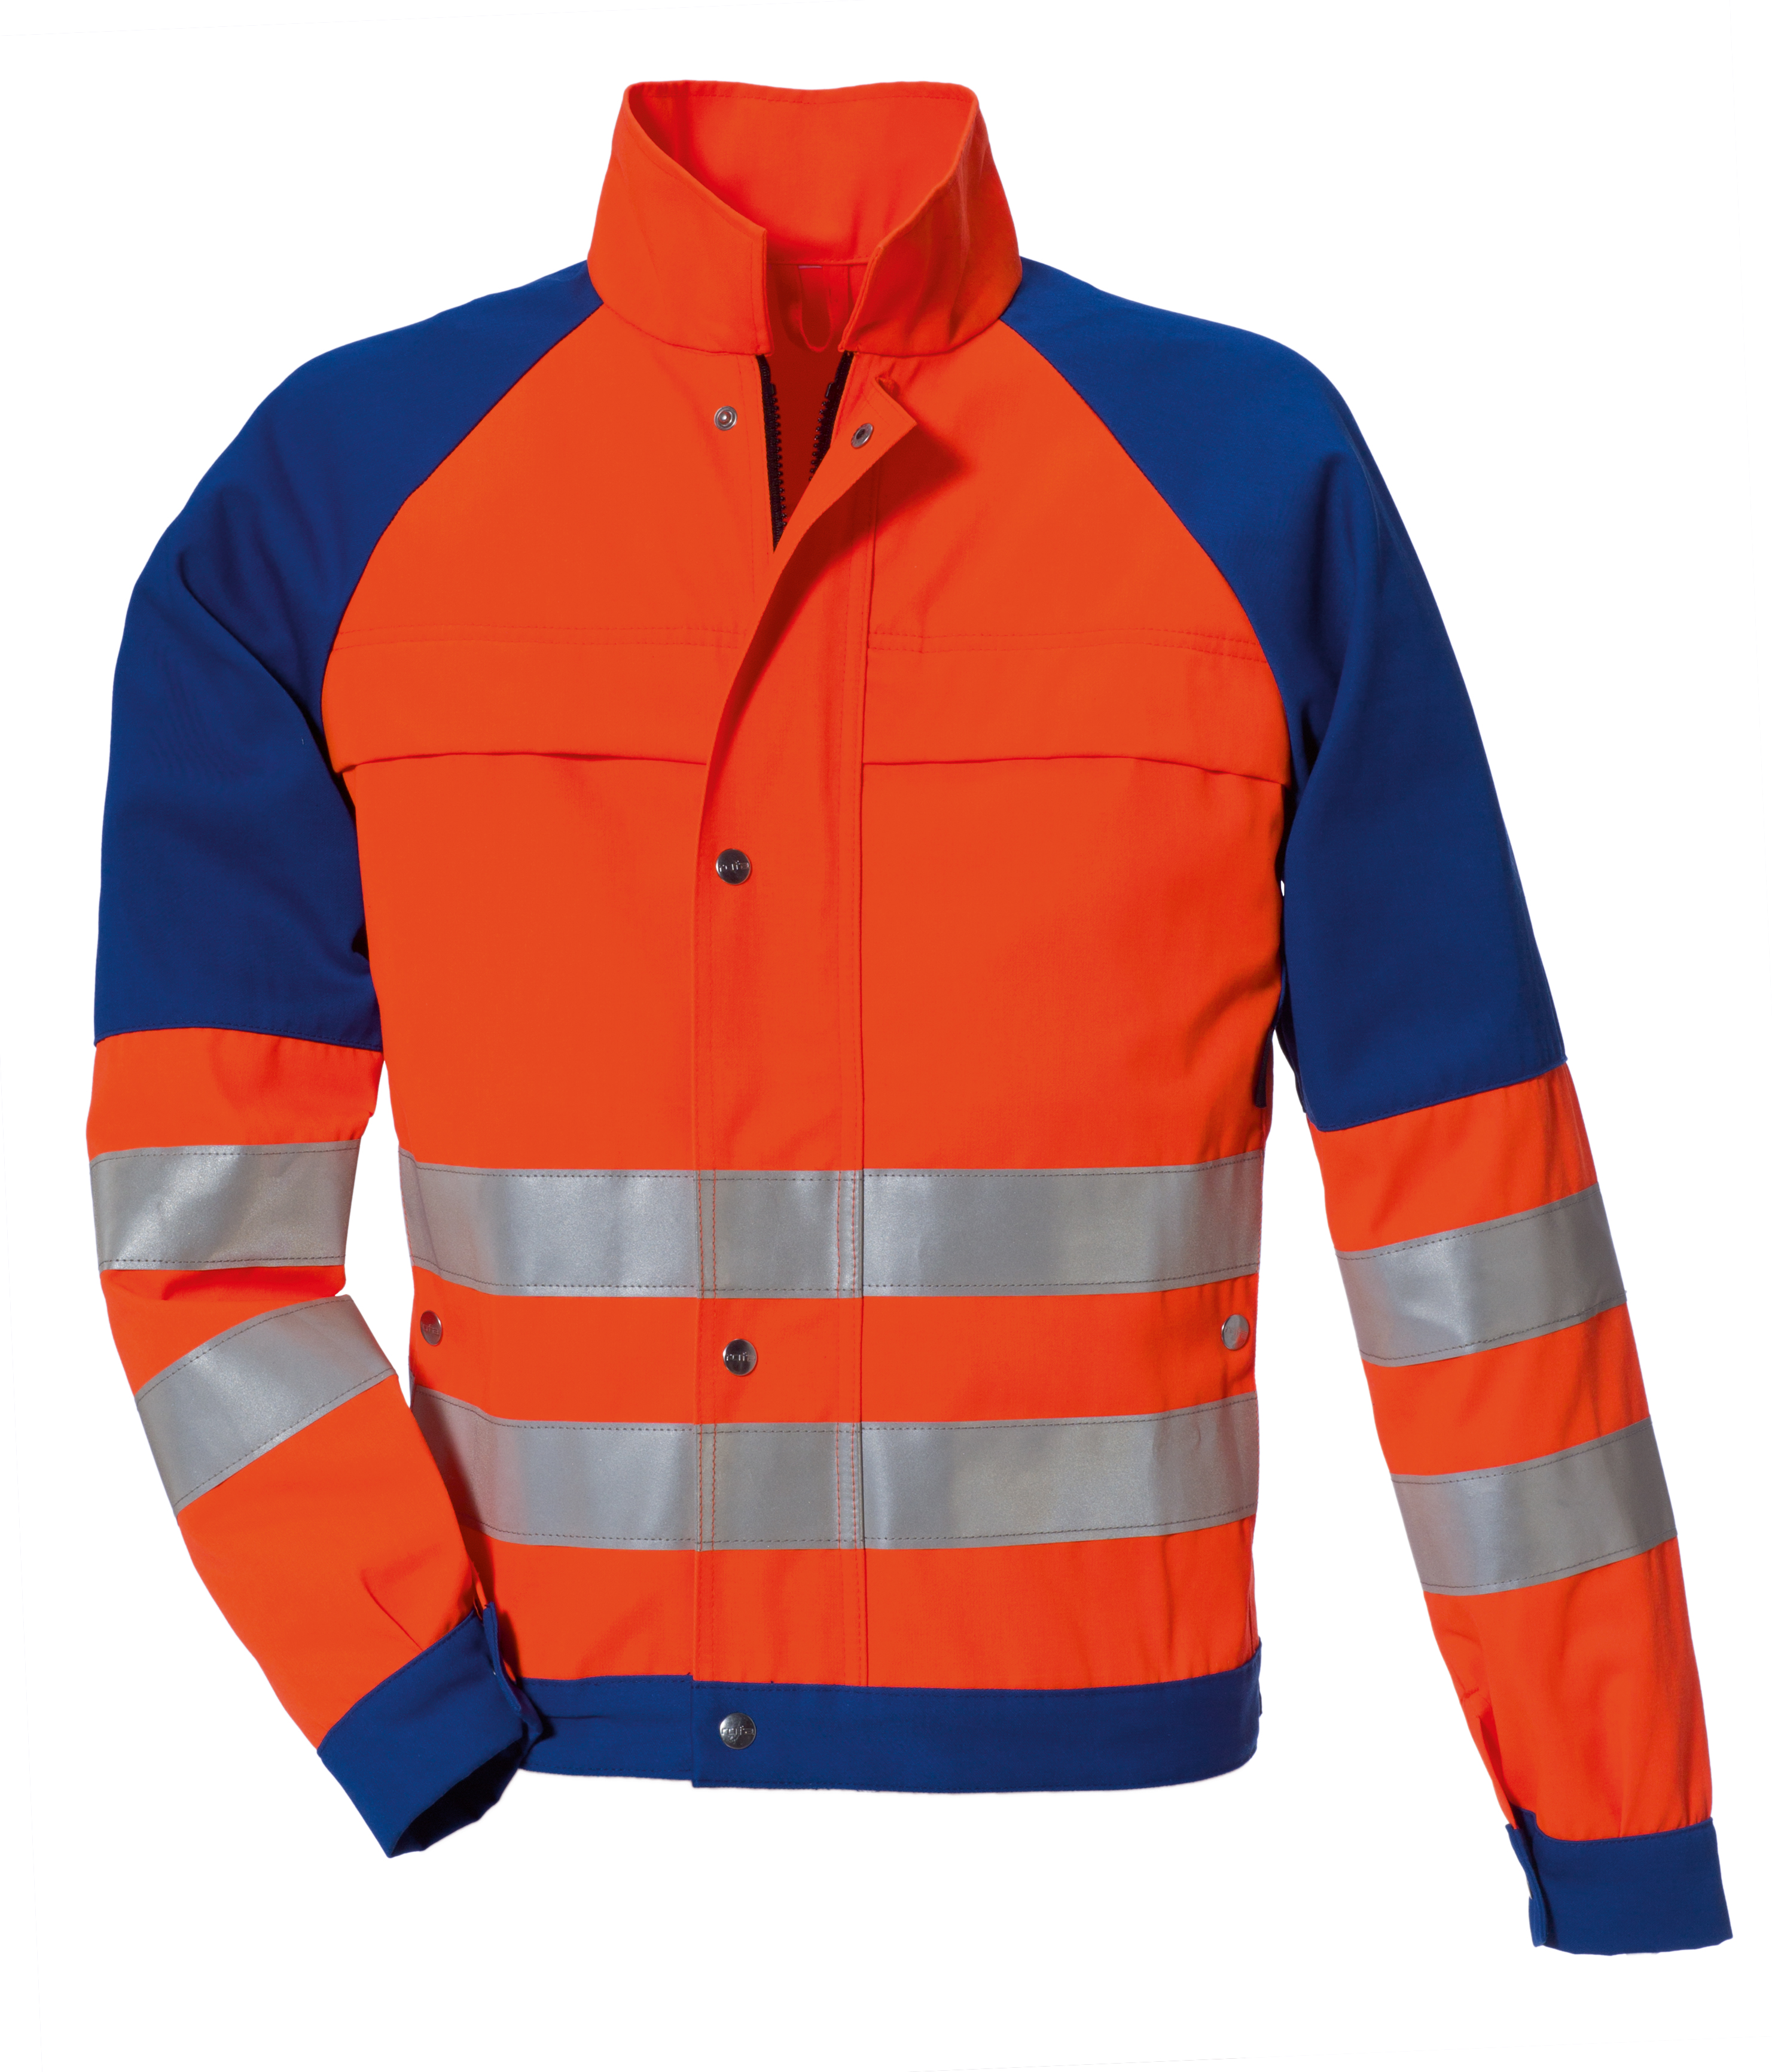 ROFA-Warnschutz, Warn-Jacke, Duo-Color, PSA, ca. 290 g/m², leuchtorange-kornblau
